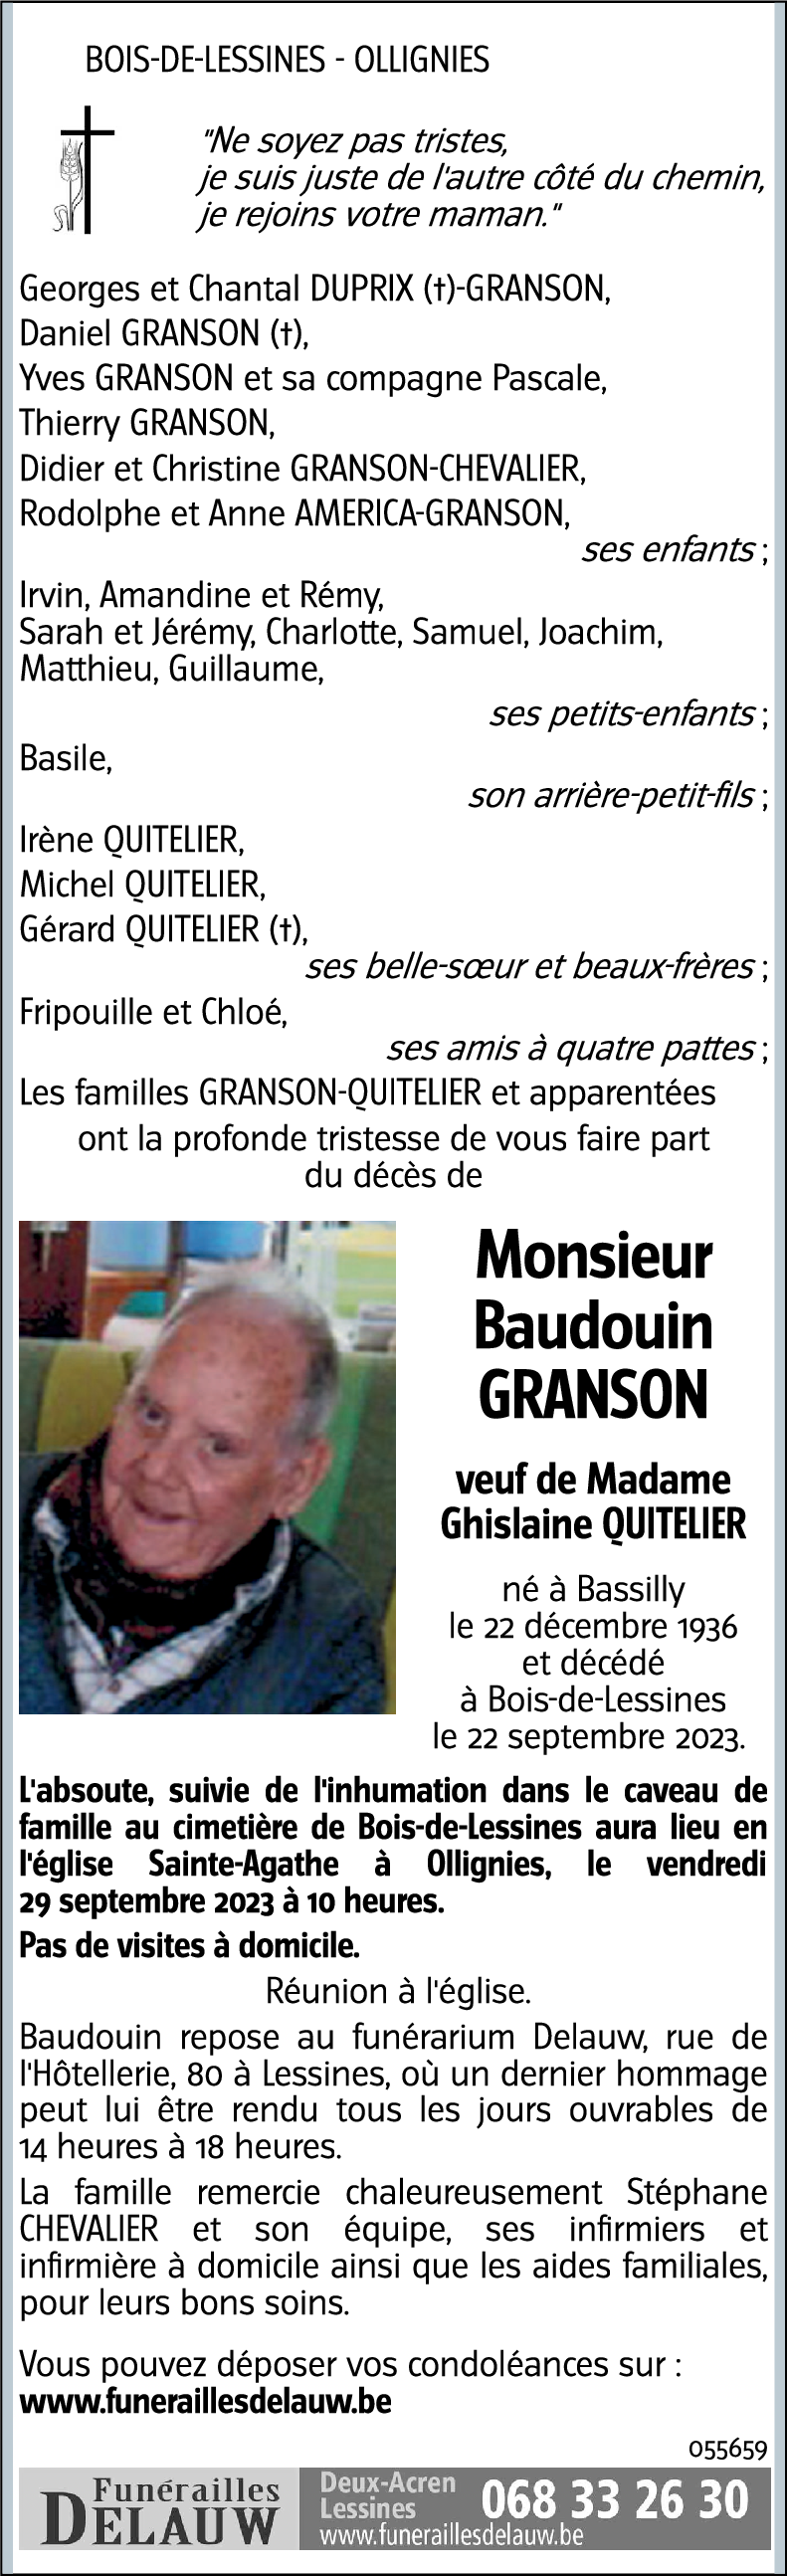 Baudouin GRANSON